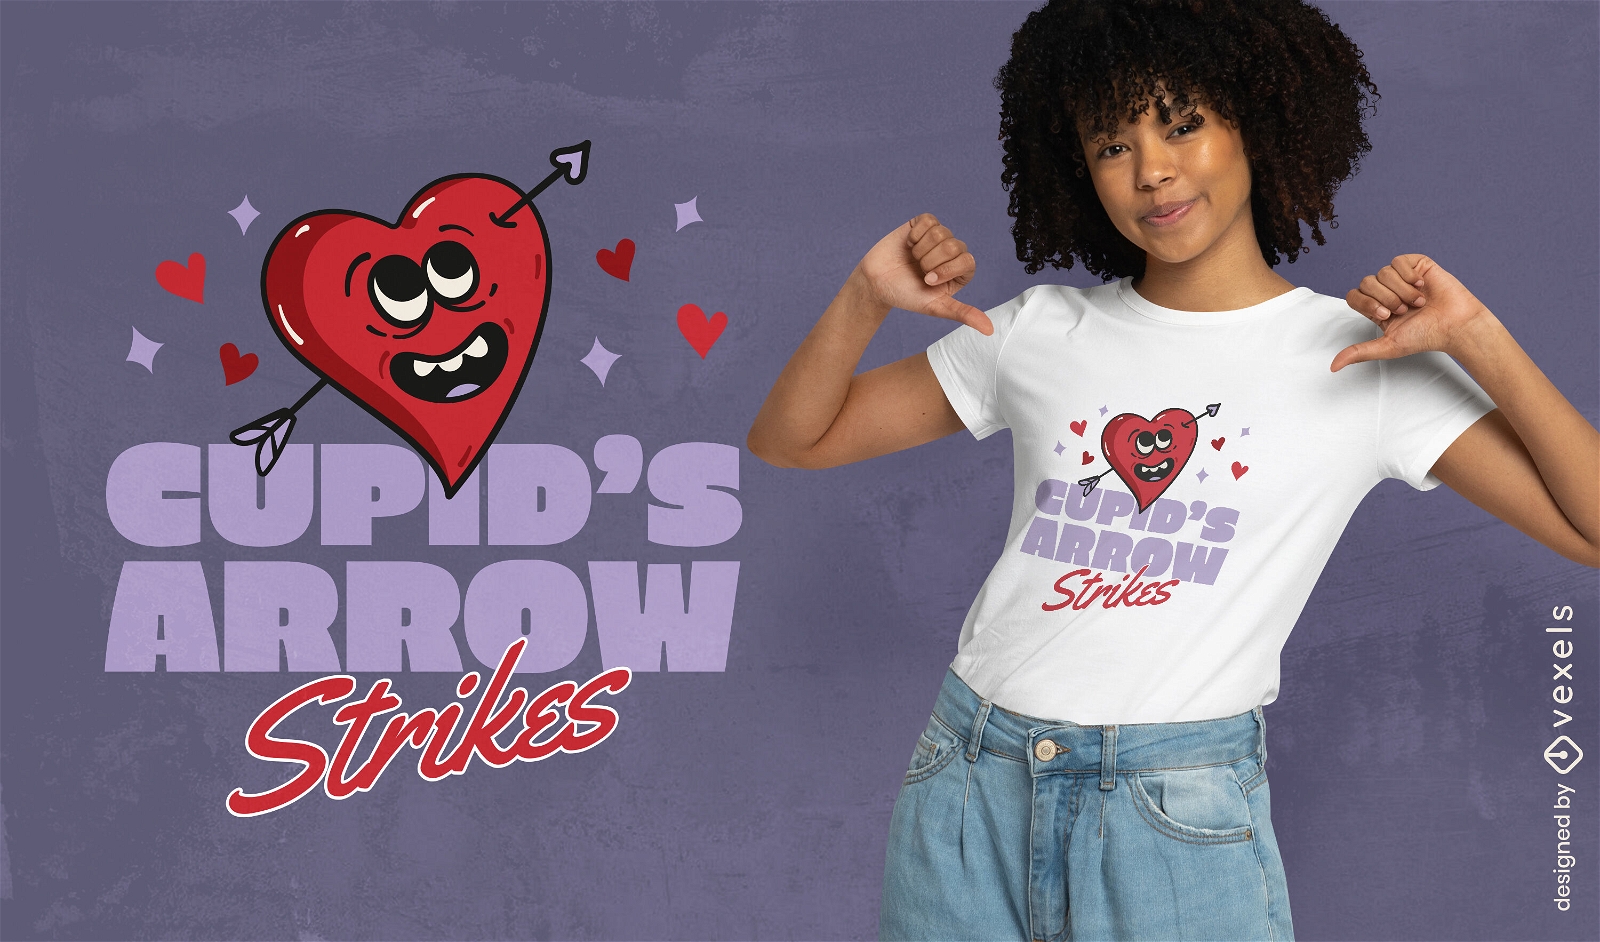 Cupid's arrow strikes t-shirt design